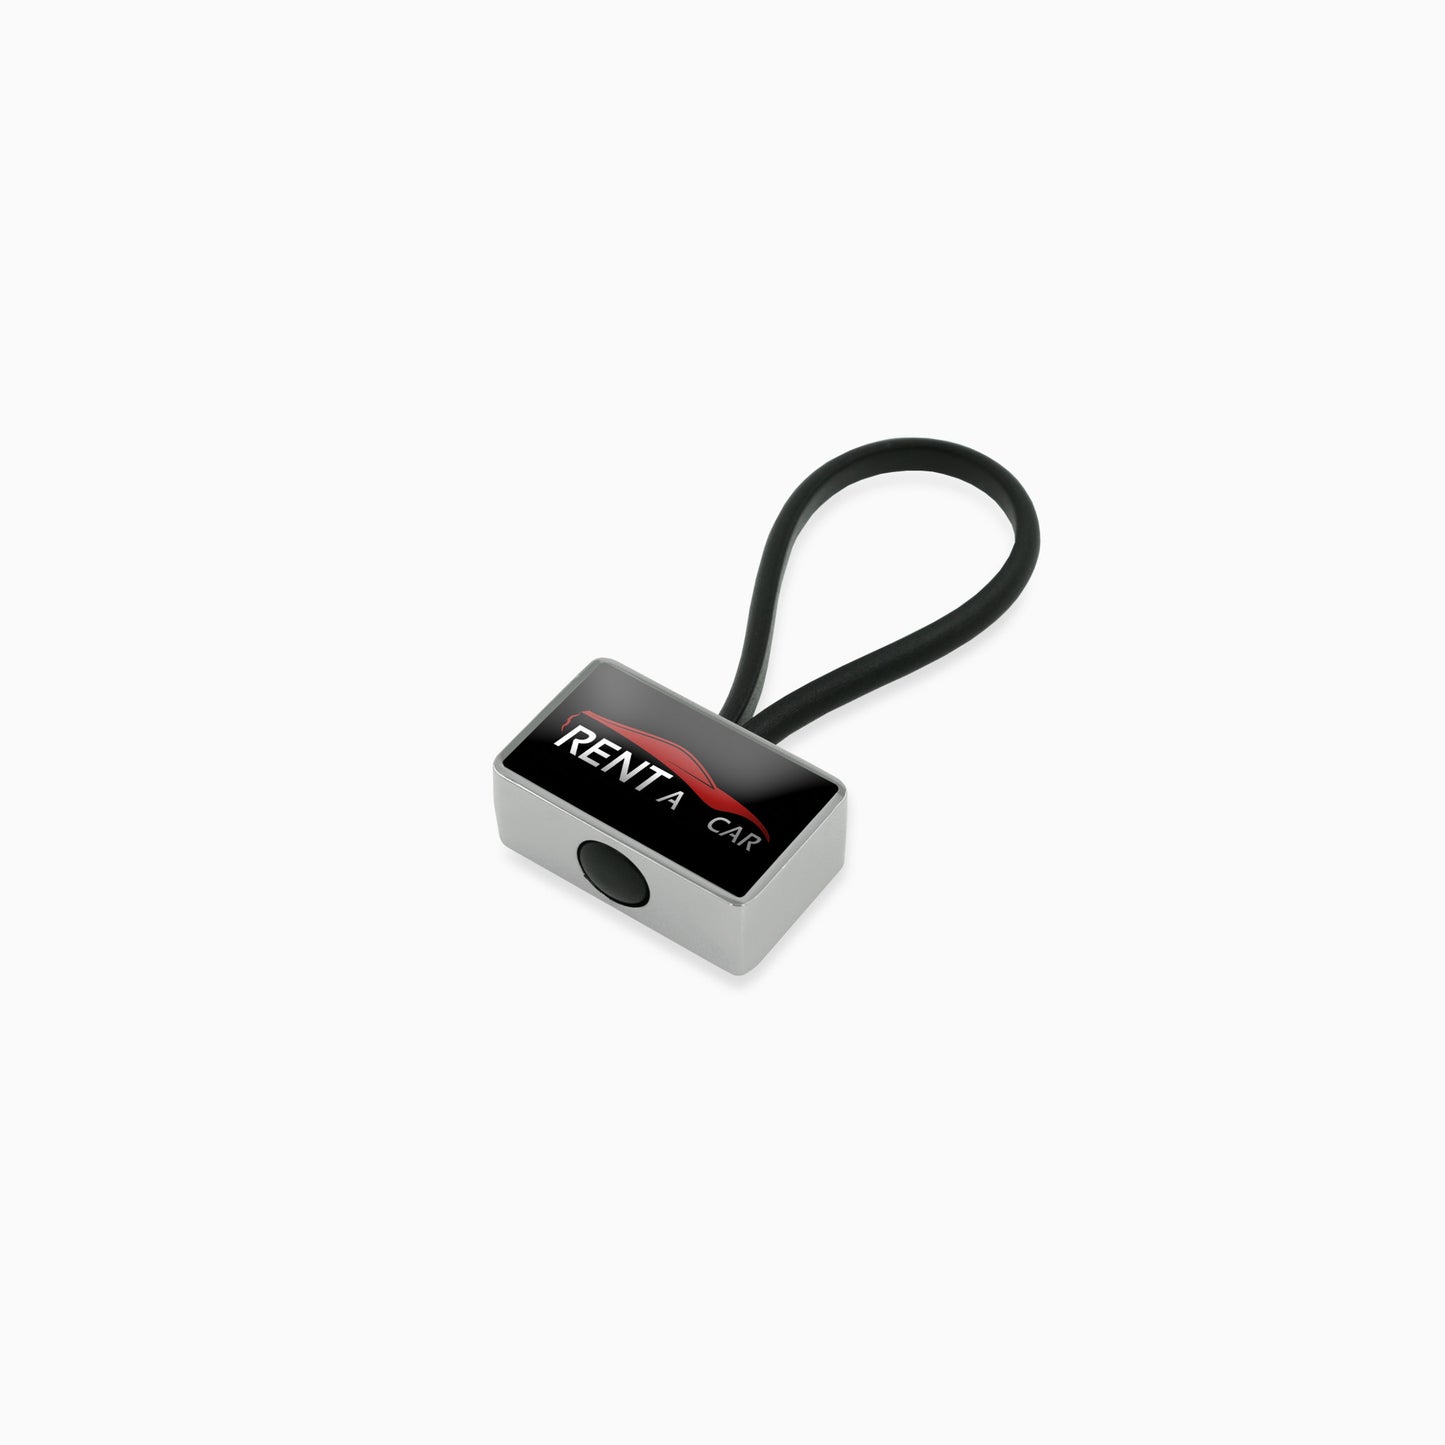 MagLoop "rectangular" keychain